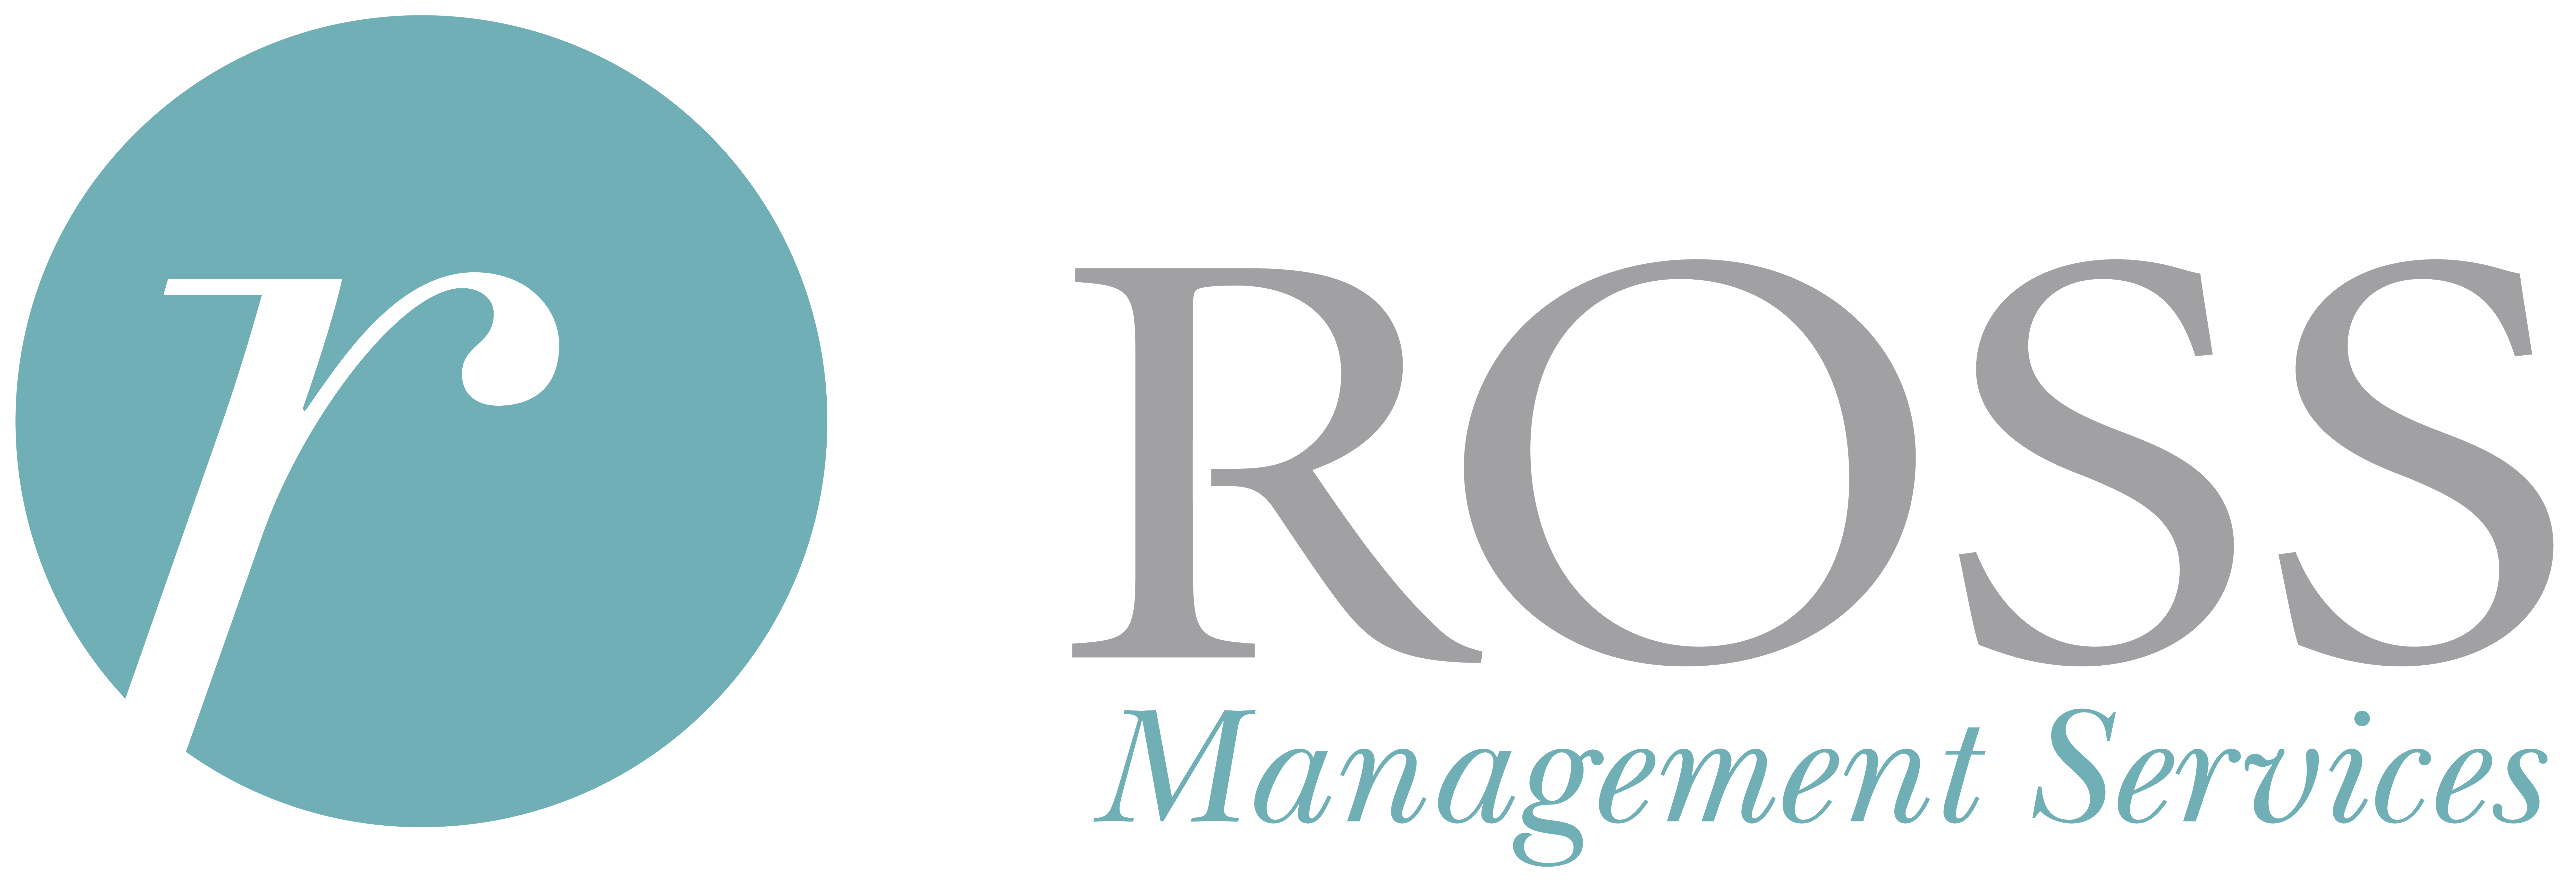 Ross Management Services